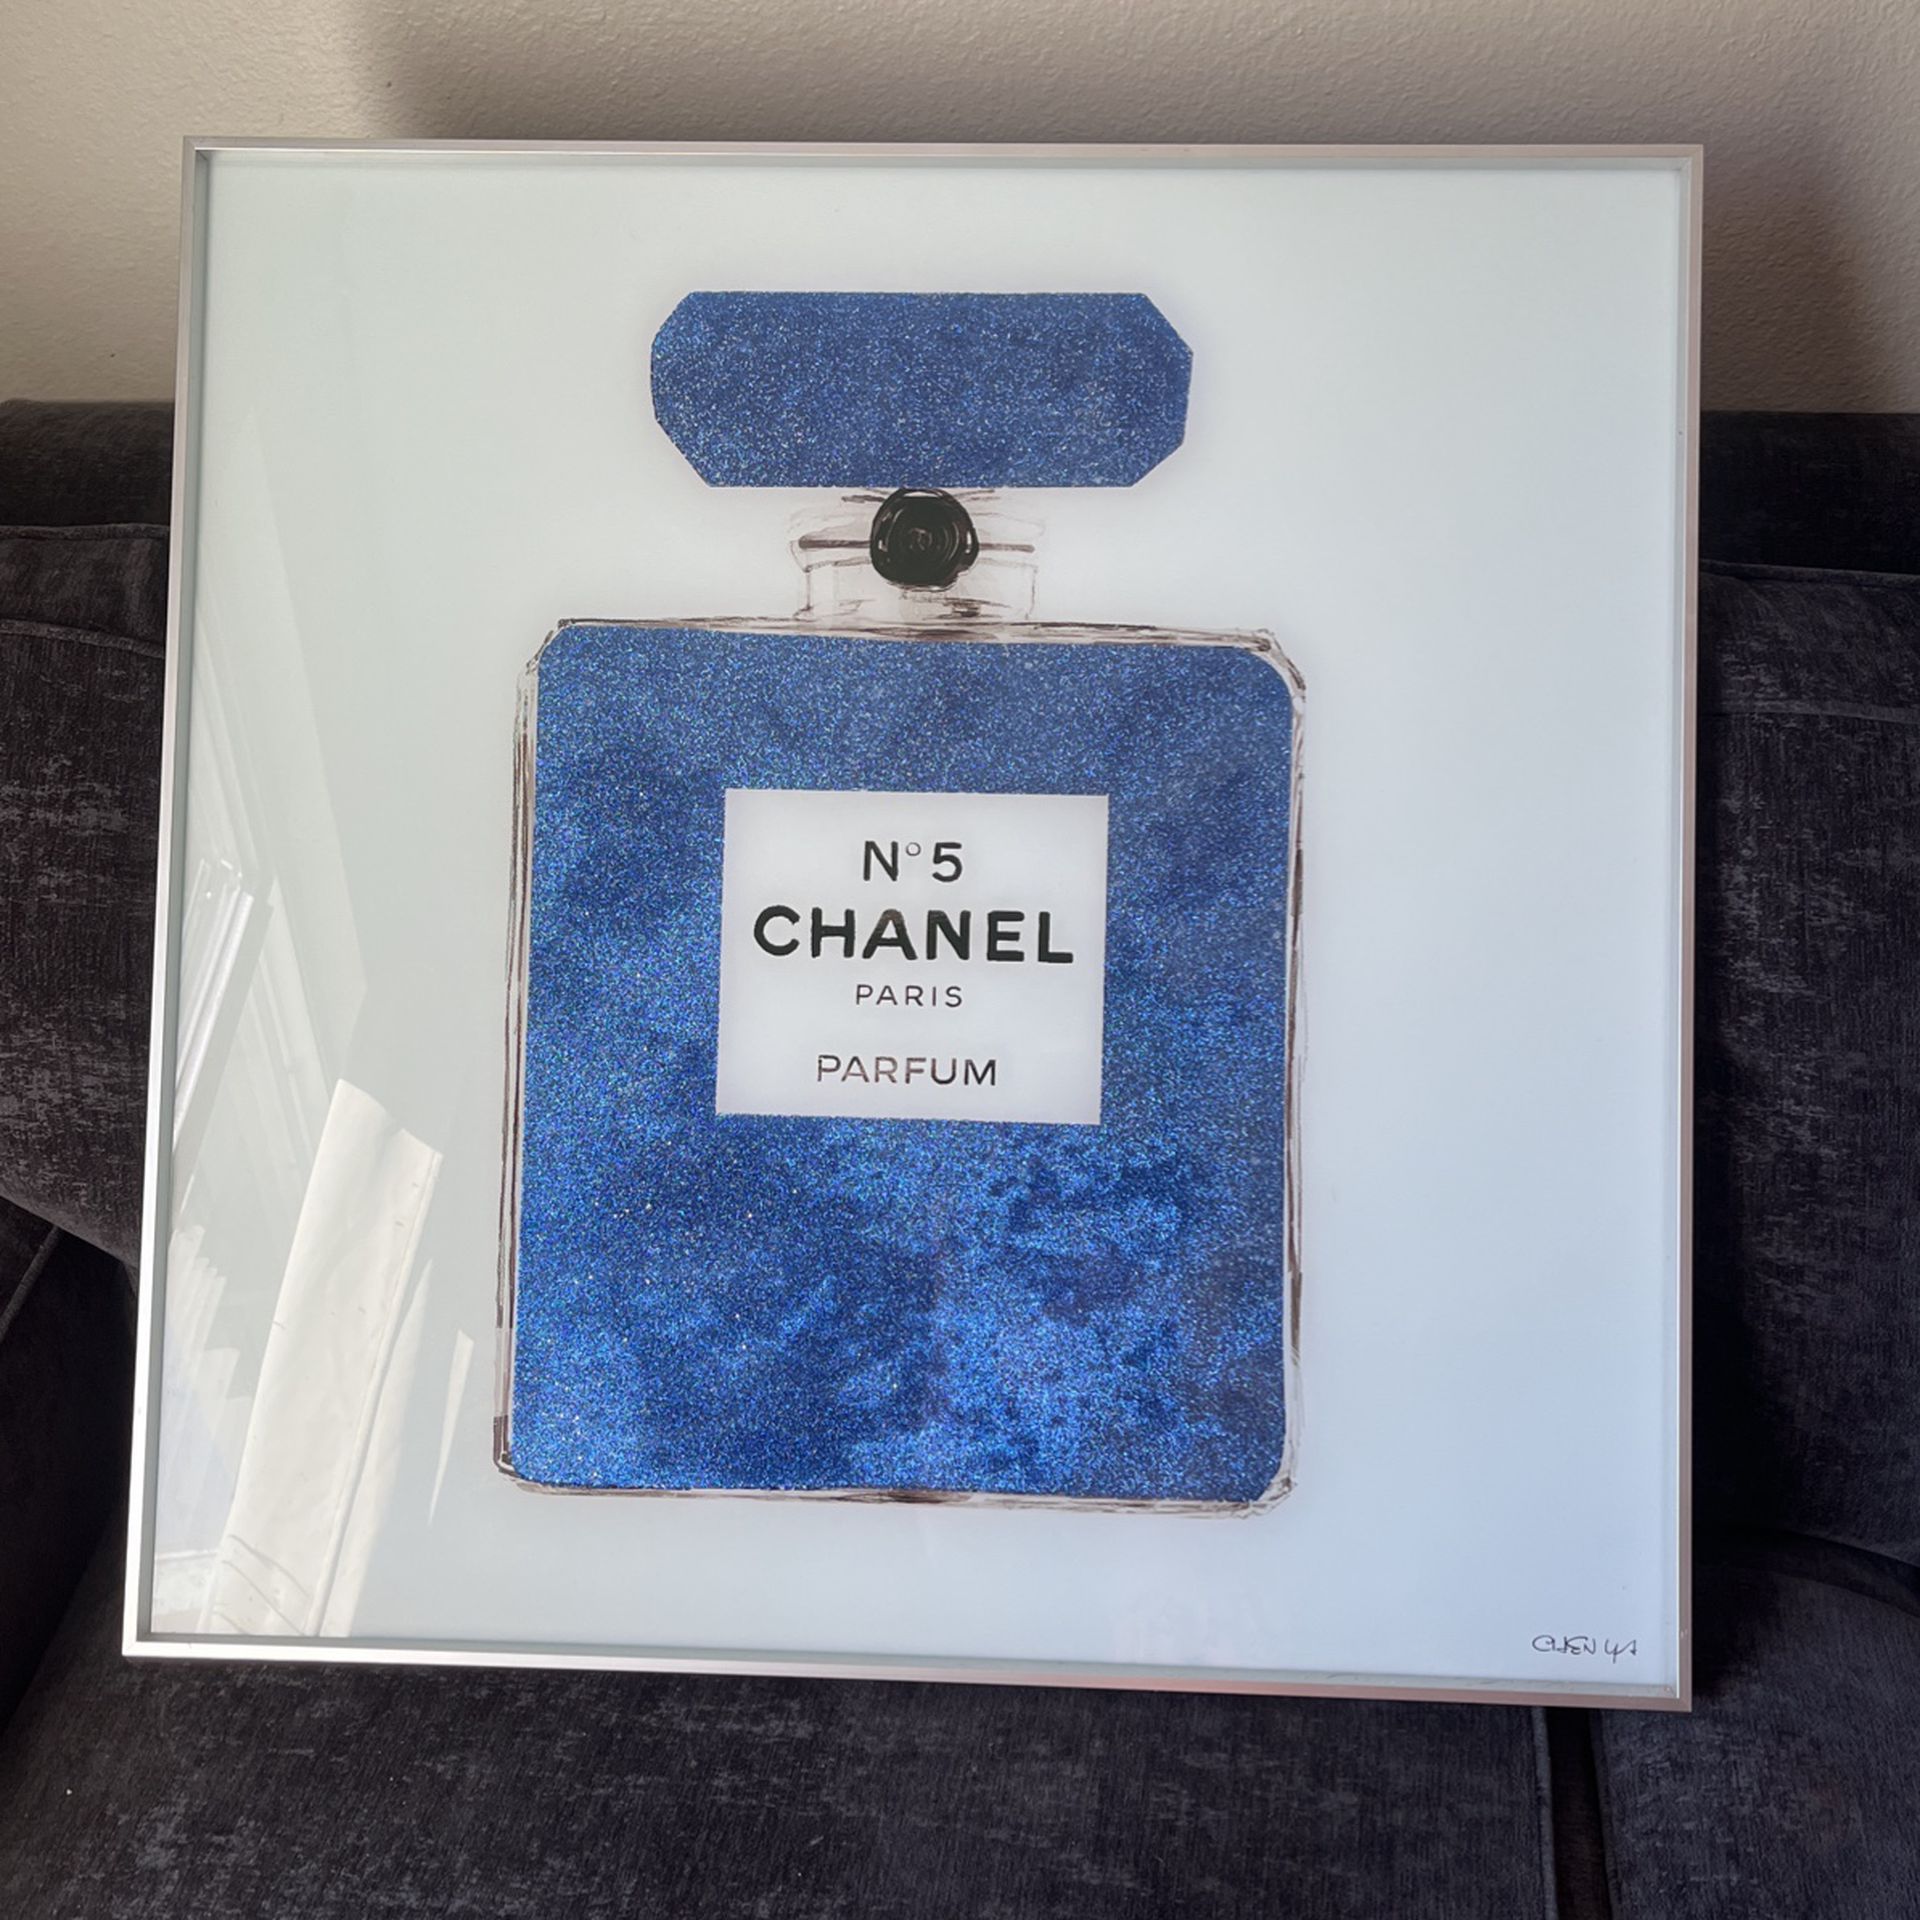 Chanel Paris Parfum Art 